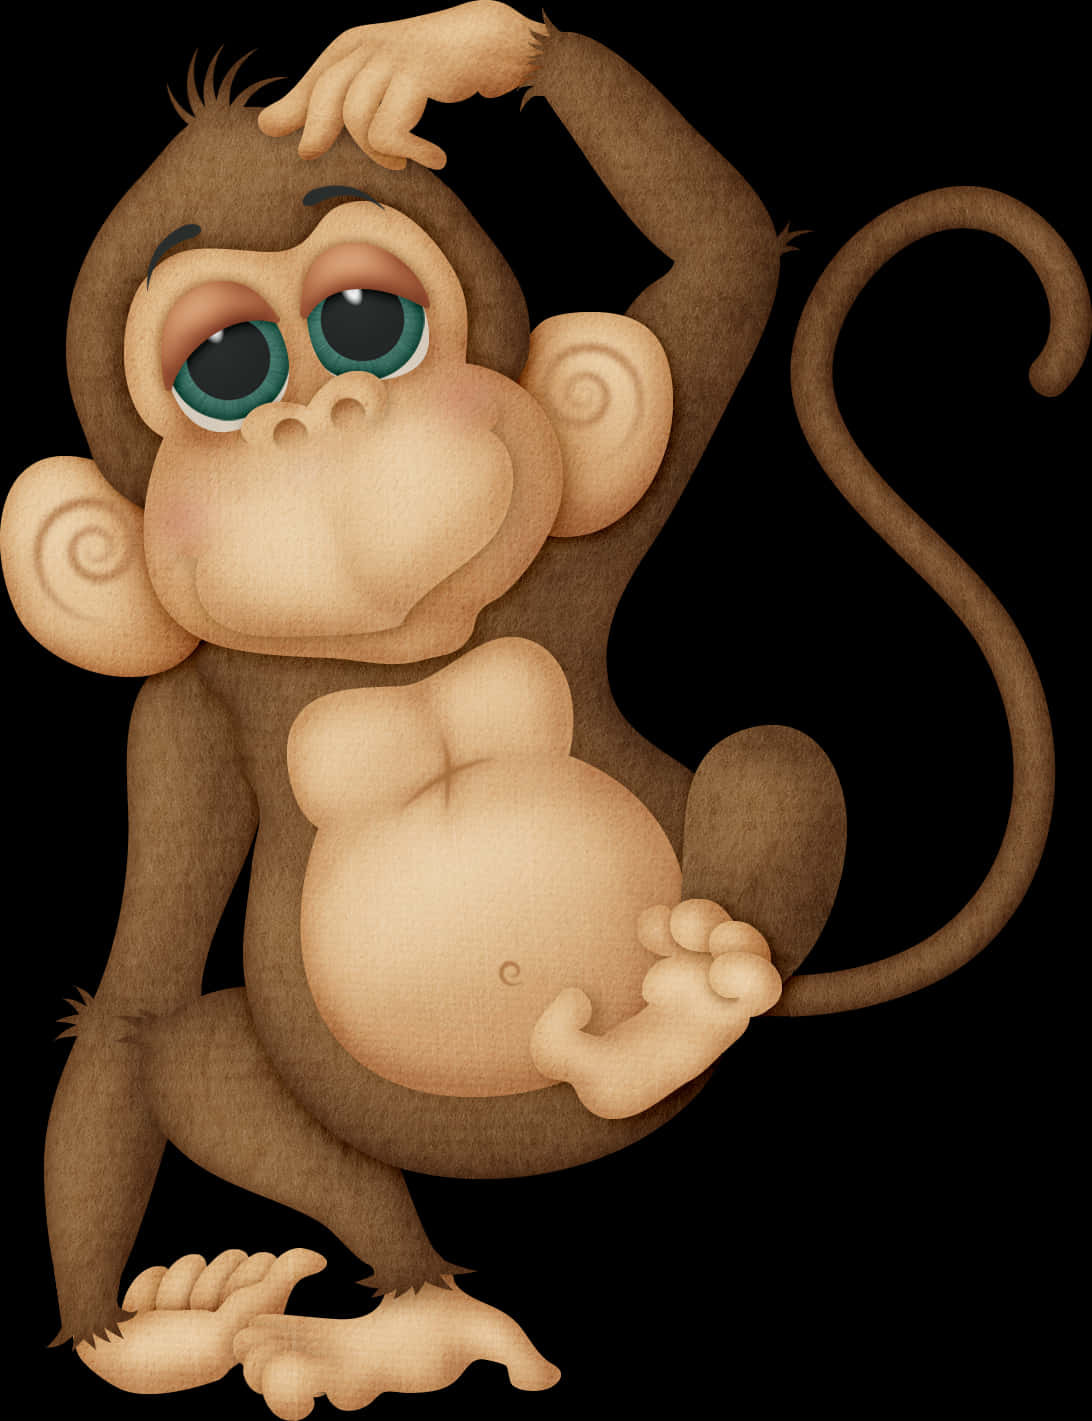 Curious Cartoon Monkey PNG image